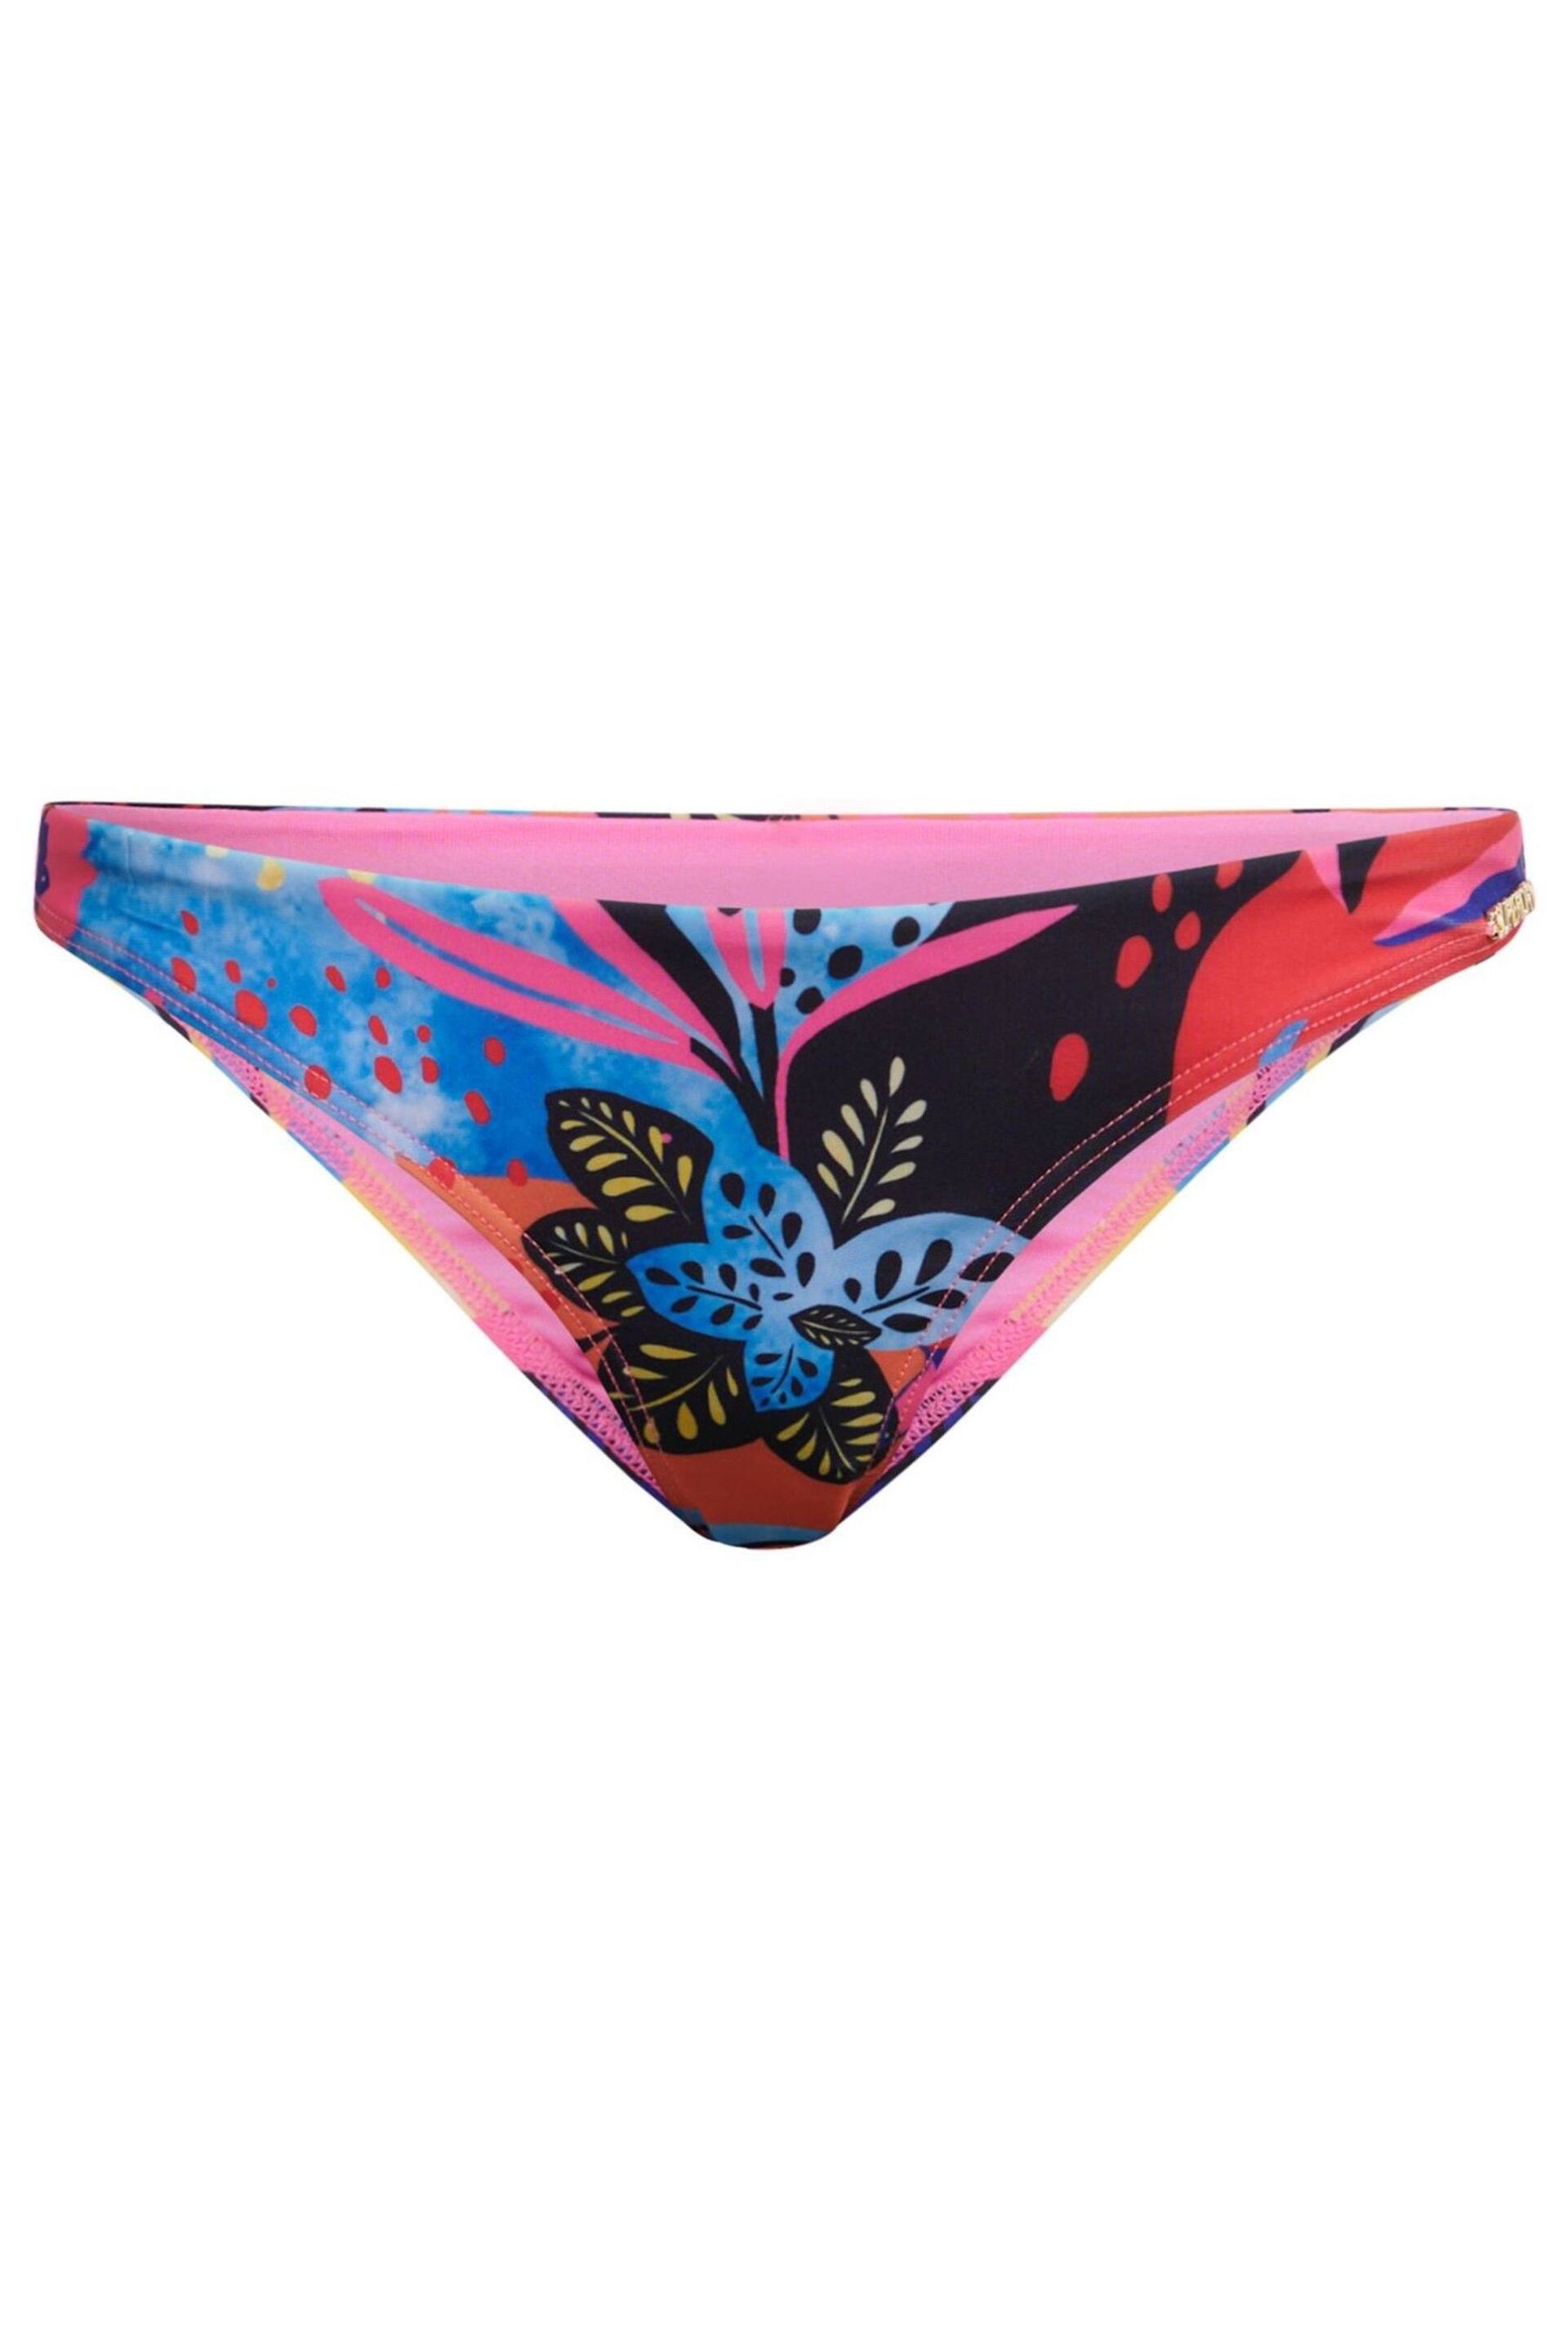 Superdry Blue Tropical Cheeky Bikini Bottoms - Image 5 of 5